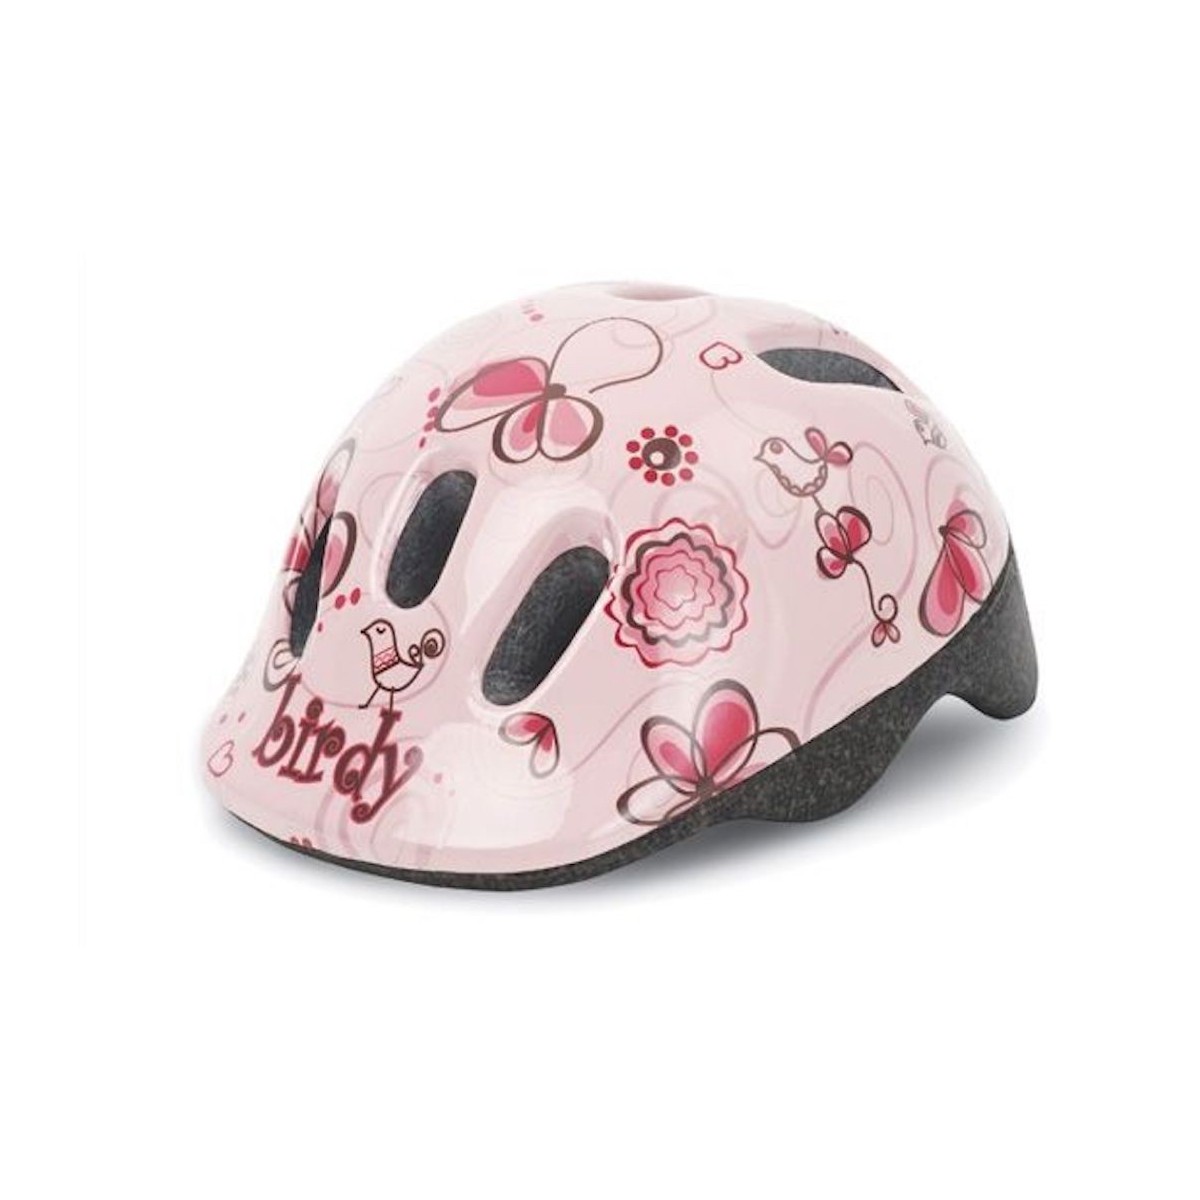 Polisport Baby Birdy helmets for kids